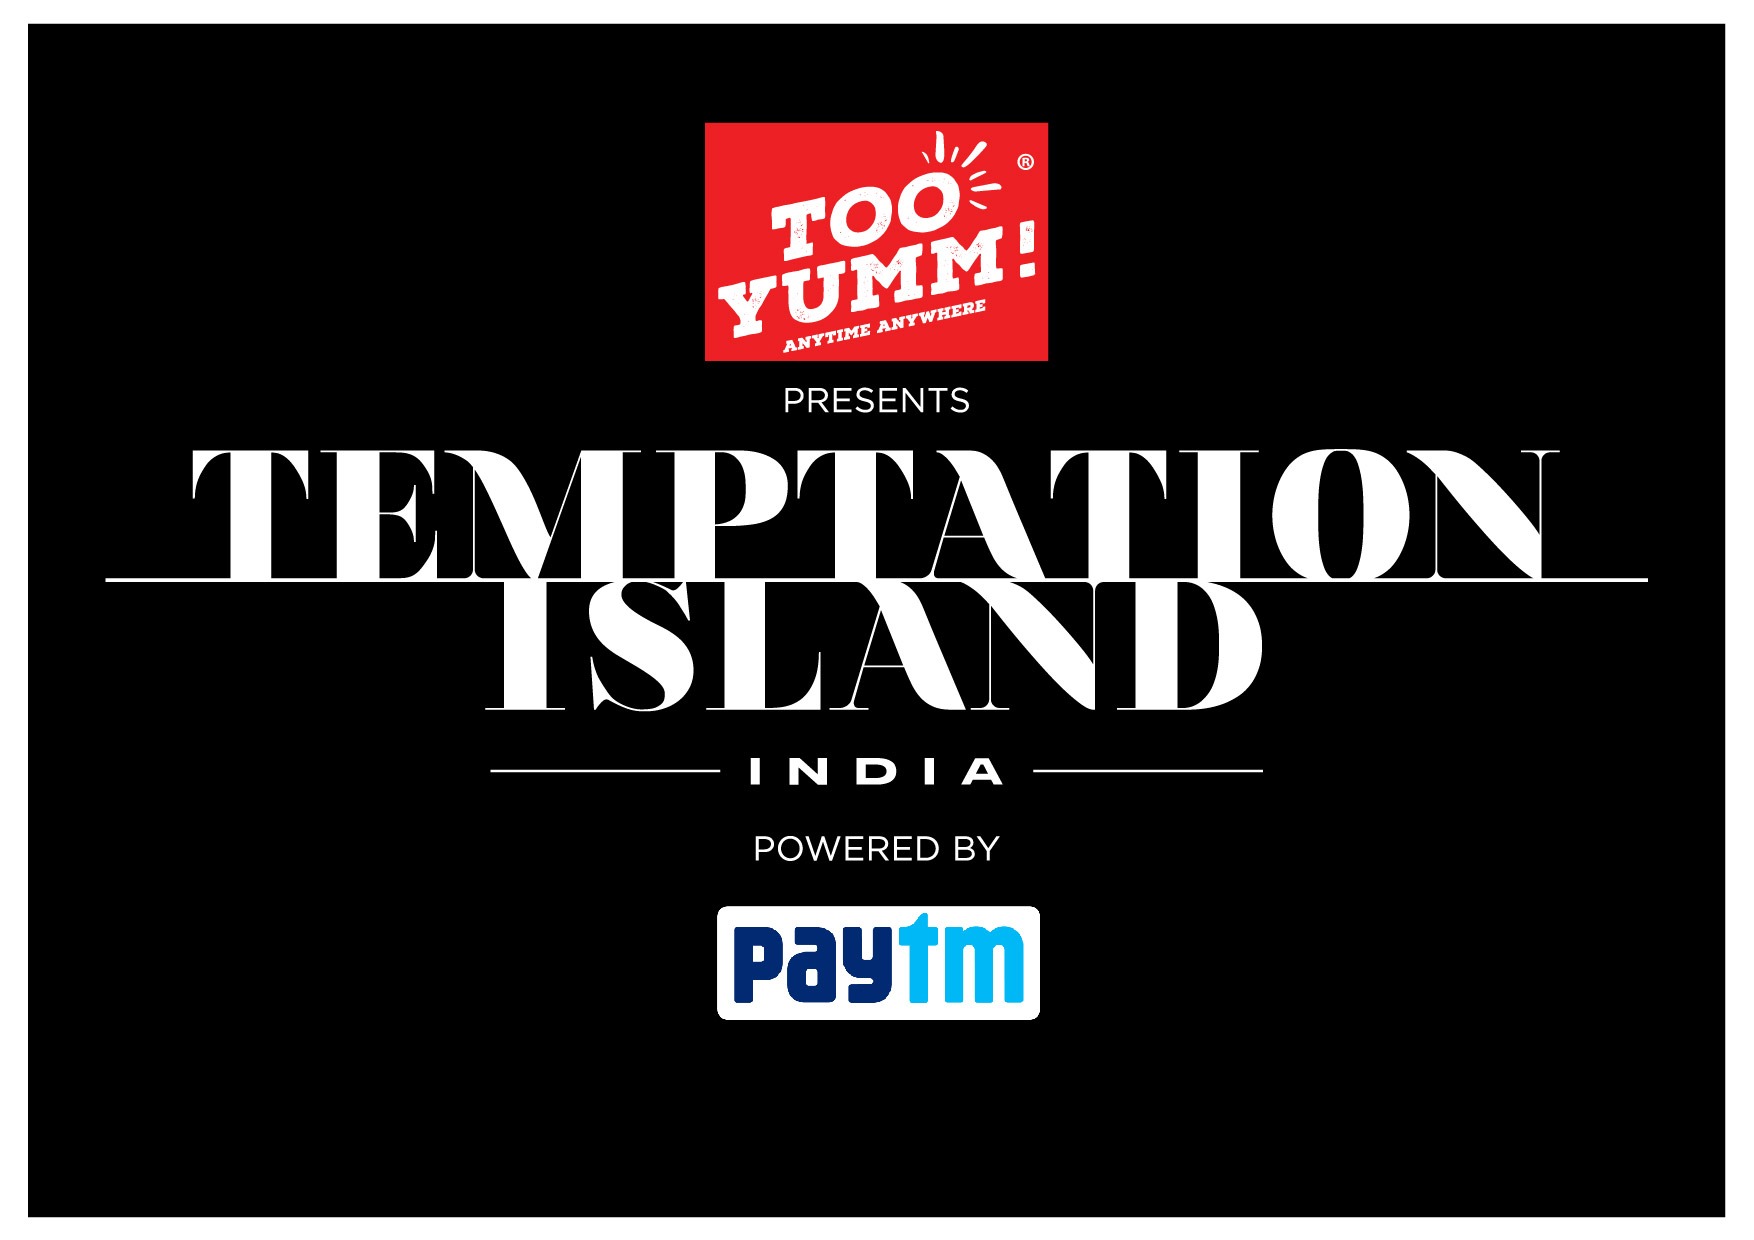 Temptation Island India on JioCinema brings the perfect mix of love drama and temptations!